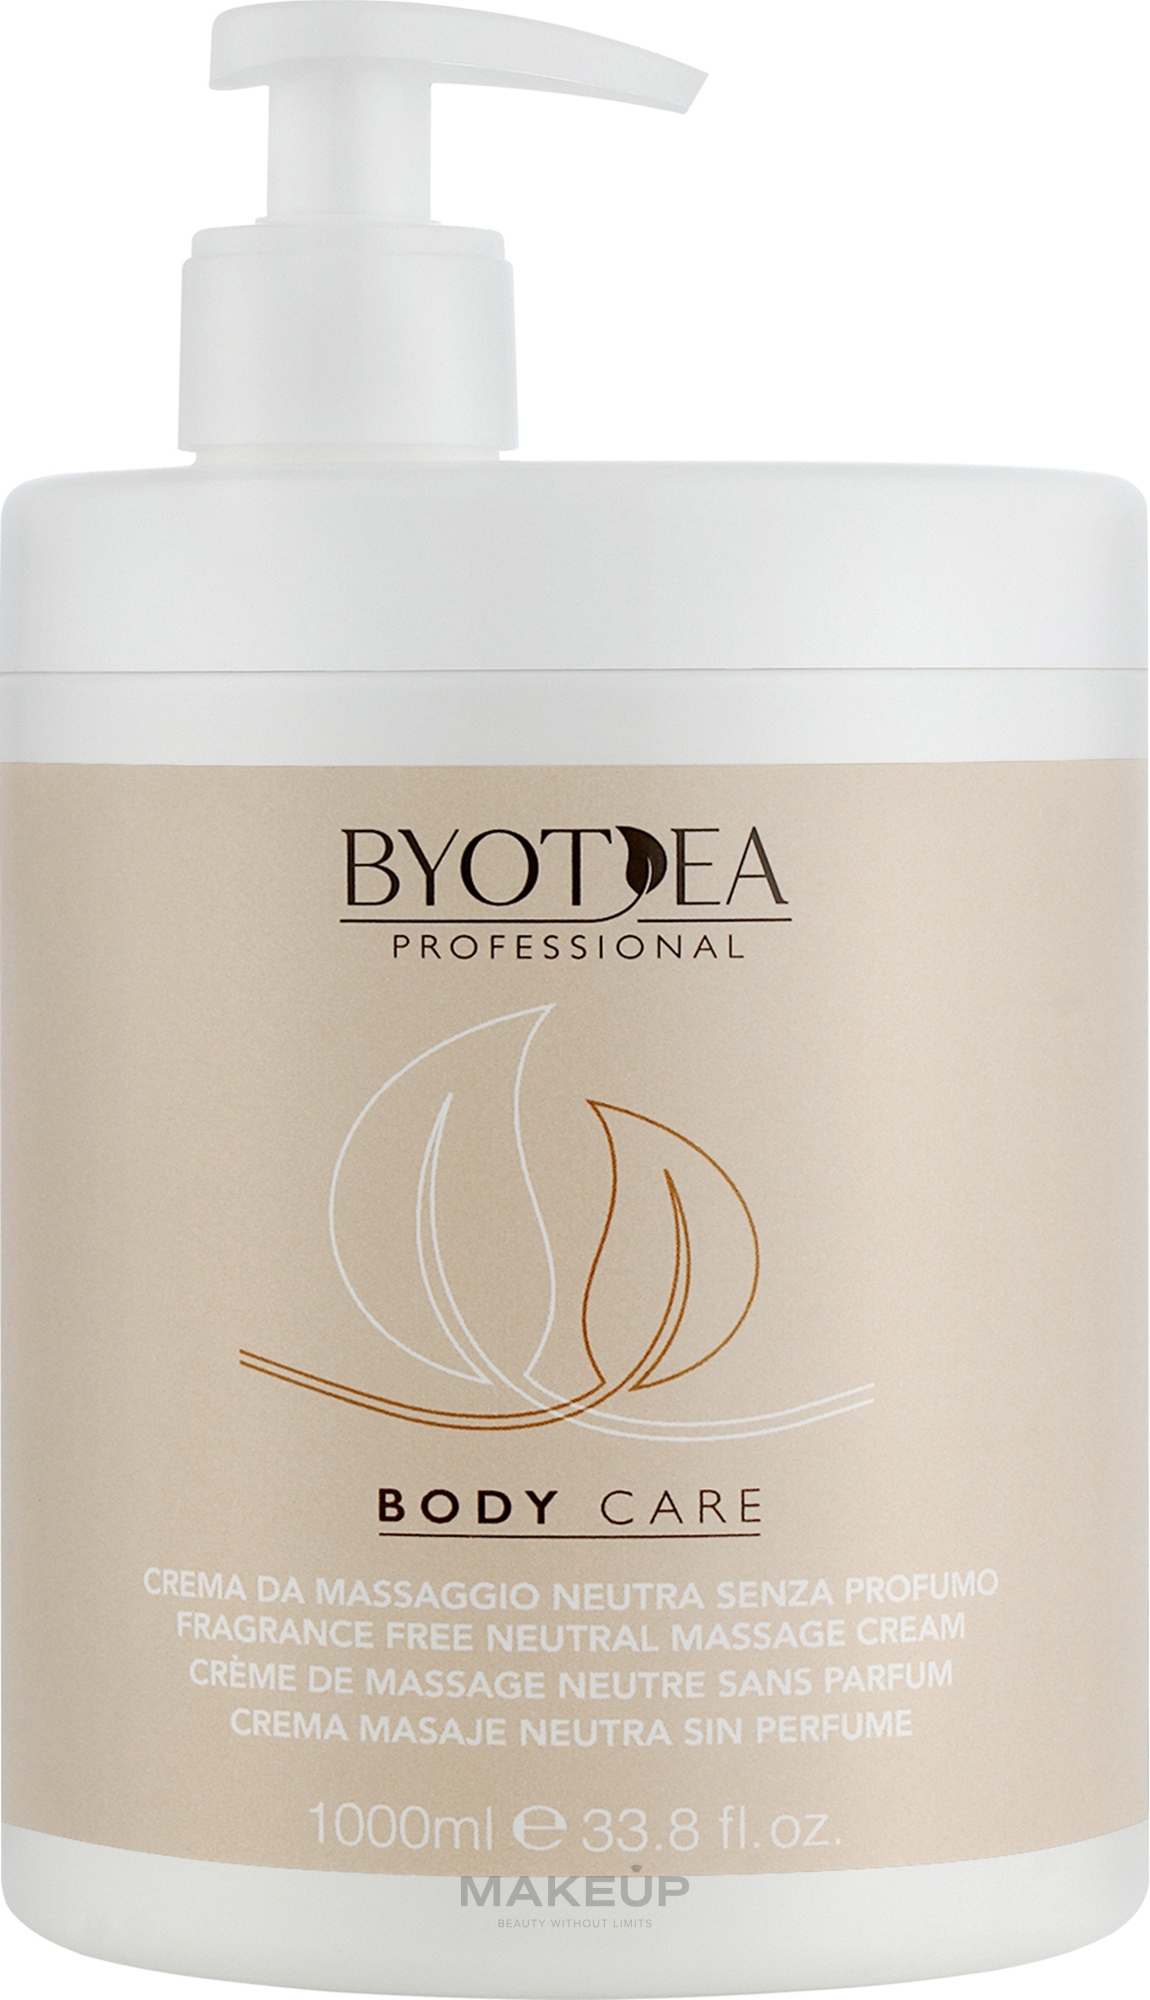 Крем для массажа нейтральный без запаха - Byothea Body Care Fragrance free Neutral Massage Cream (с помпой) — фото 1000ml